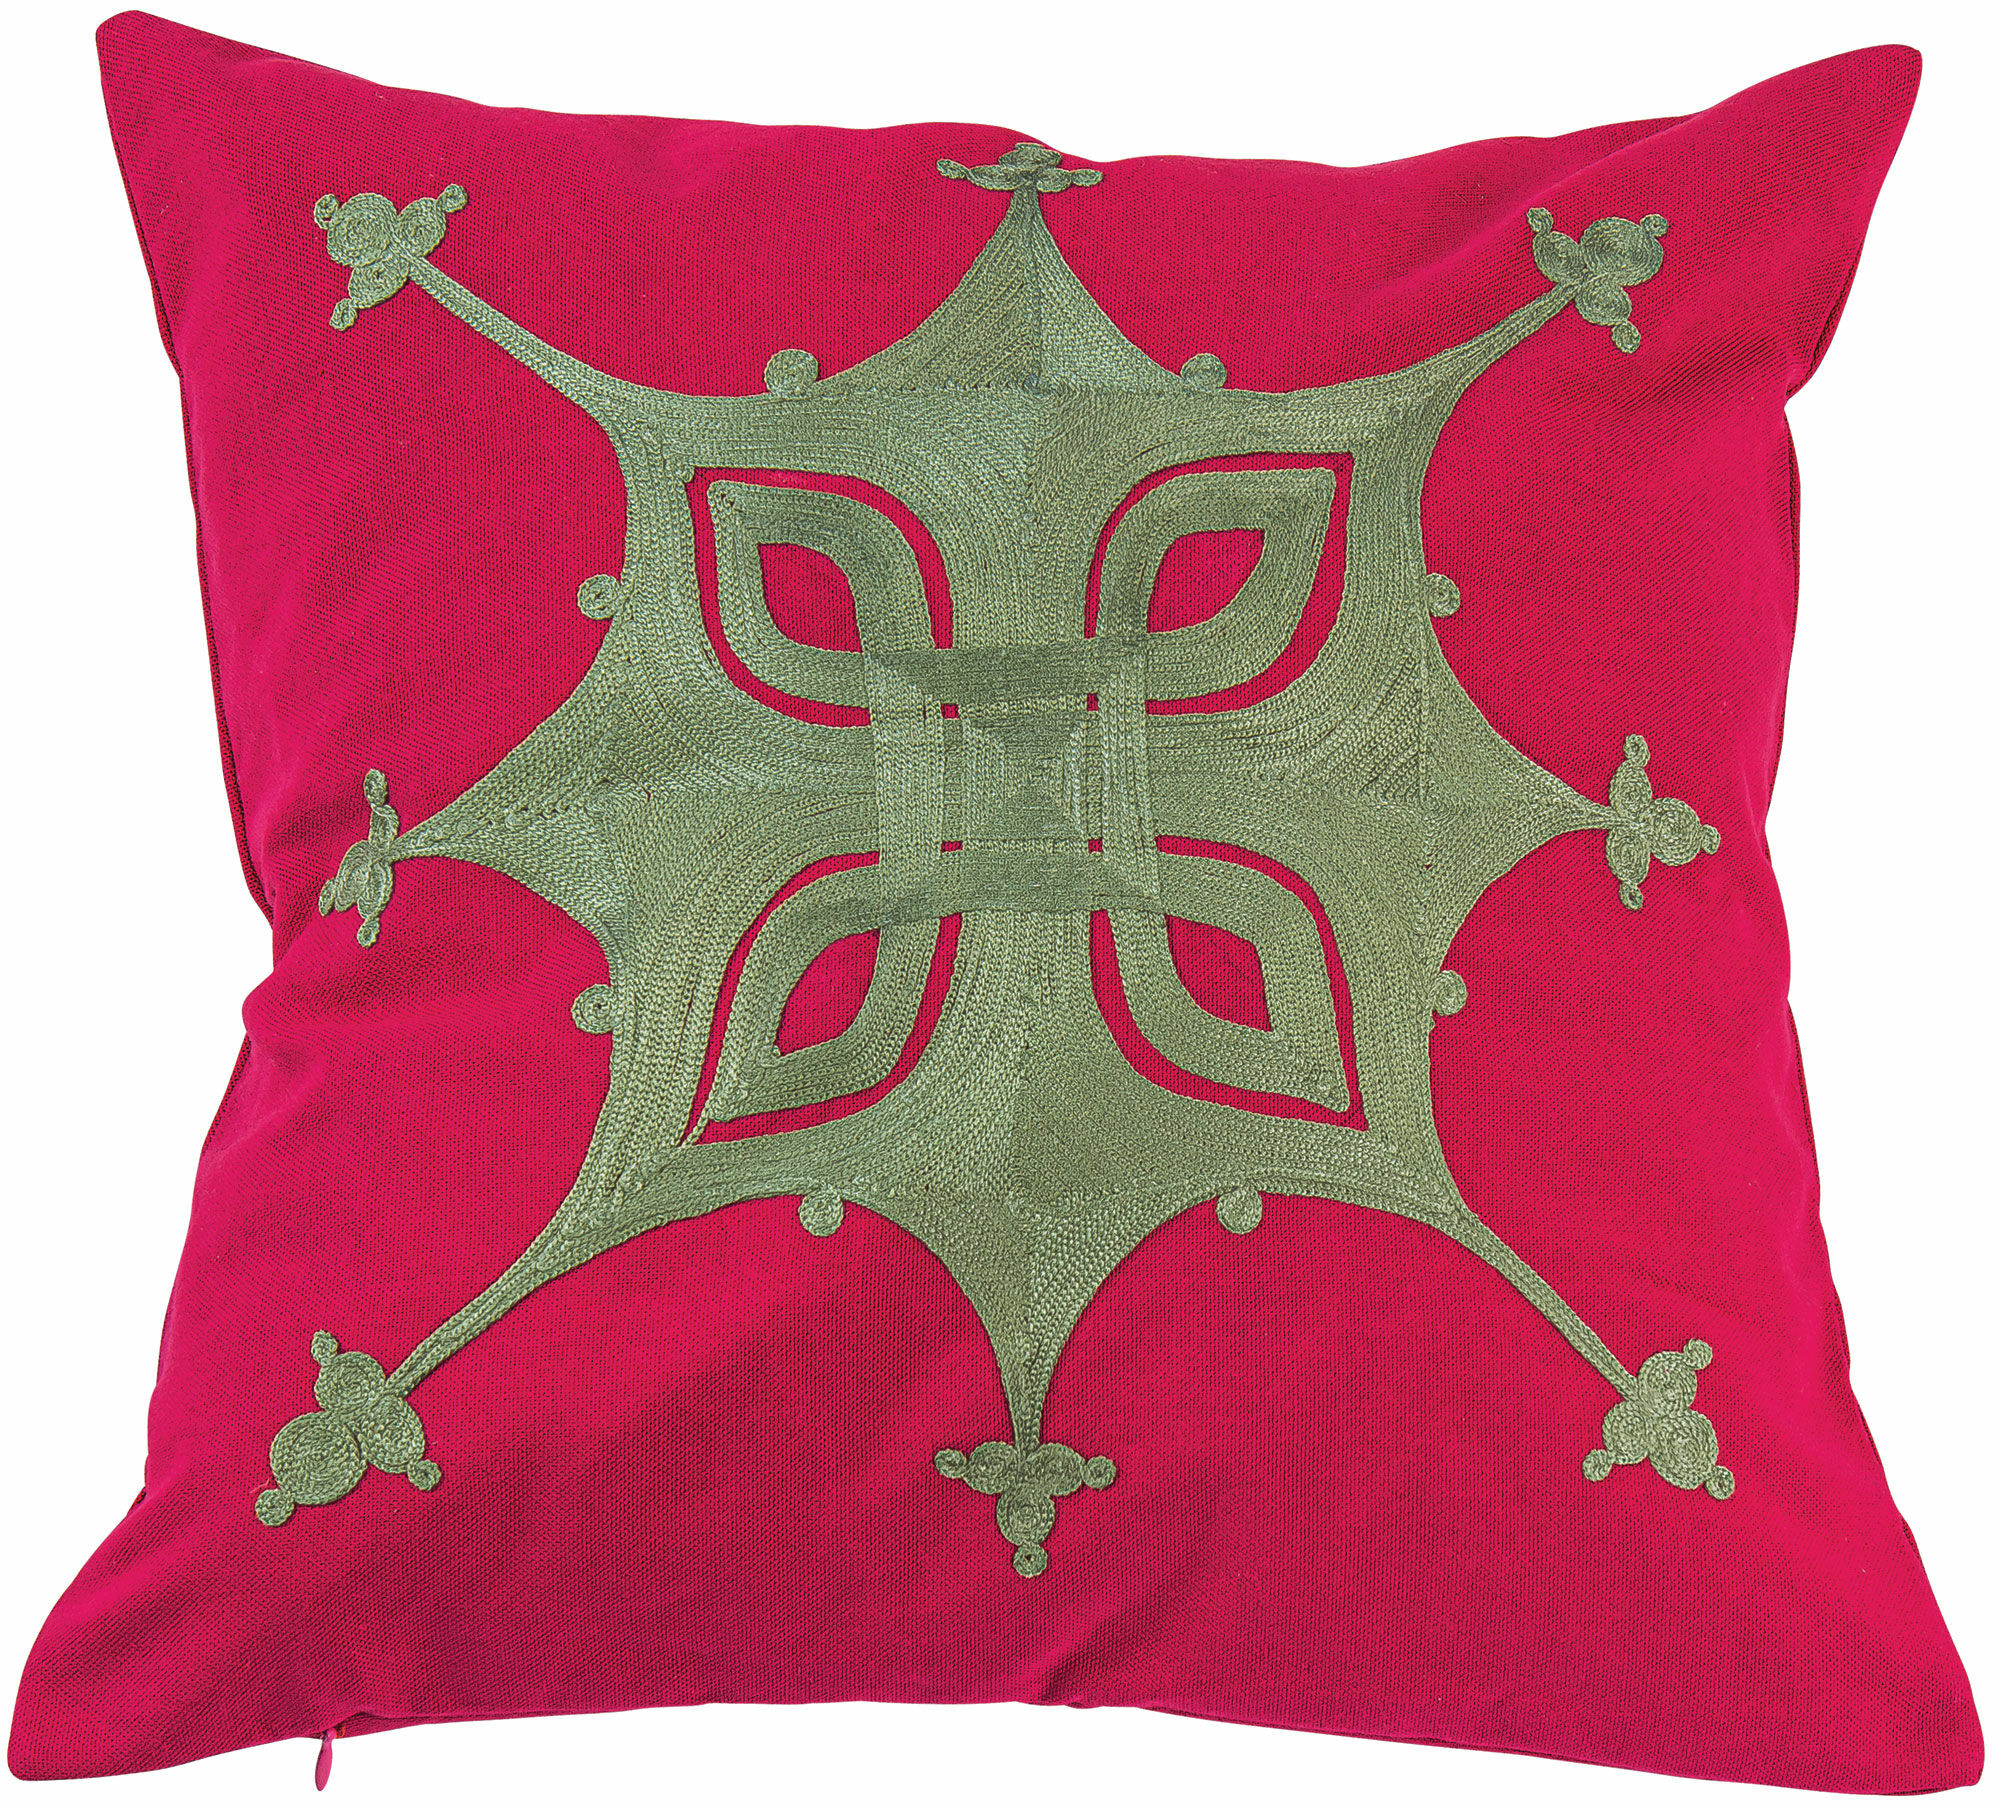 Cushion cover "Tuareg", pink-olive green version